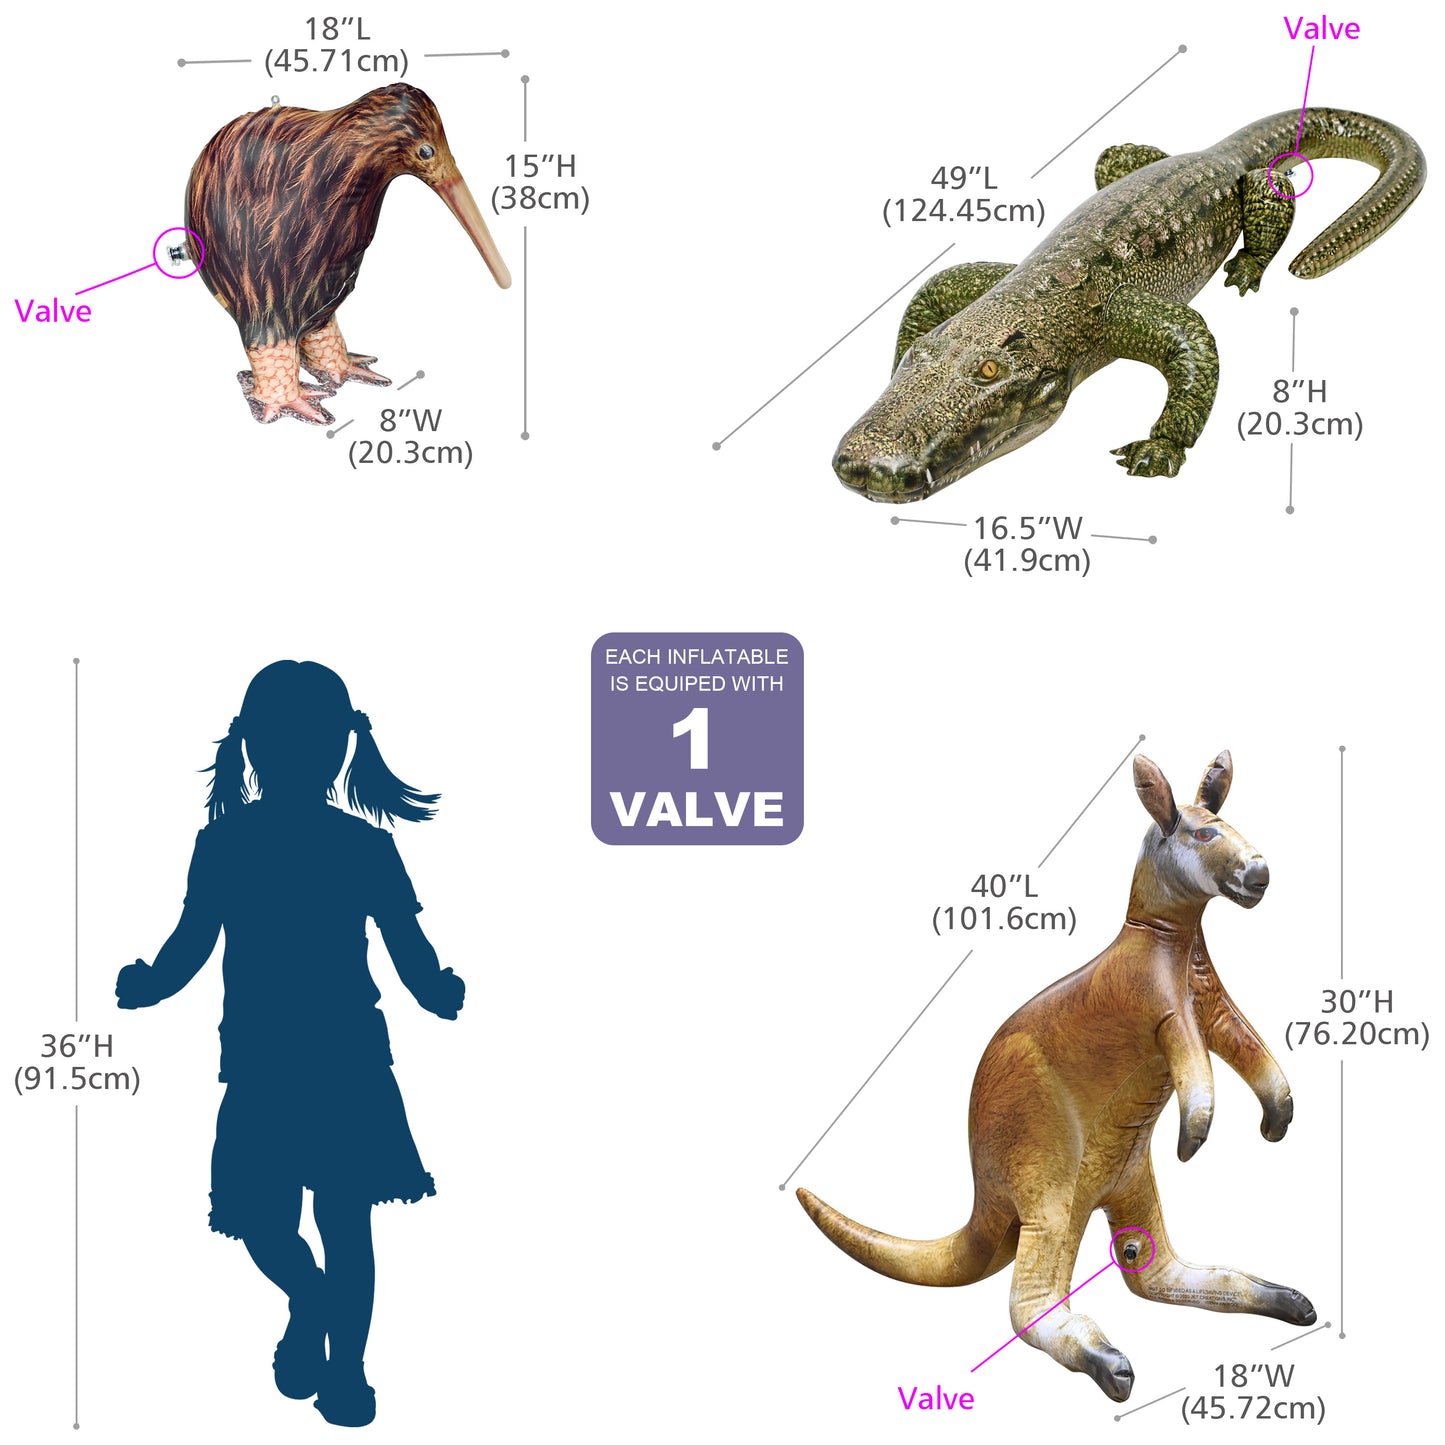 JC-KKG - Kangaroo, Kiwi bird, Alligator - Measurement